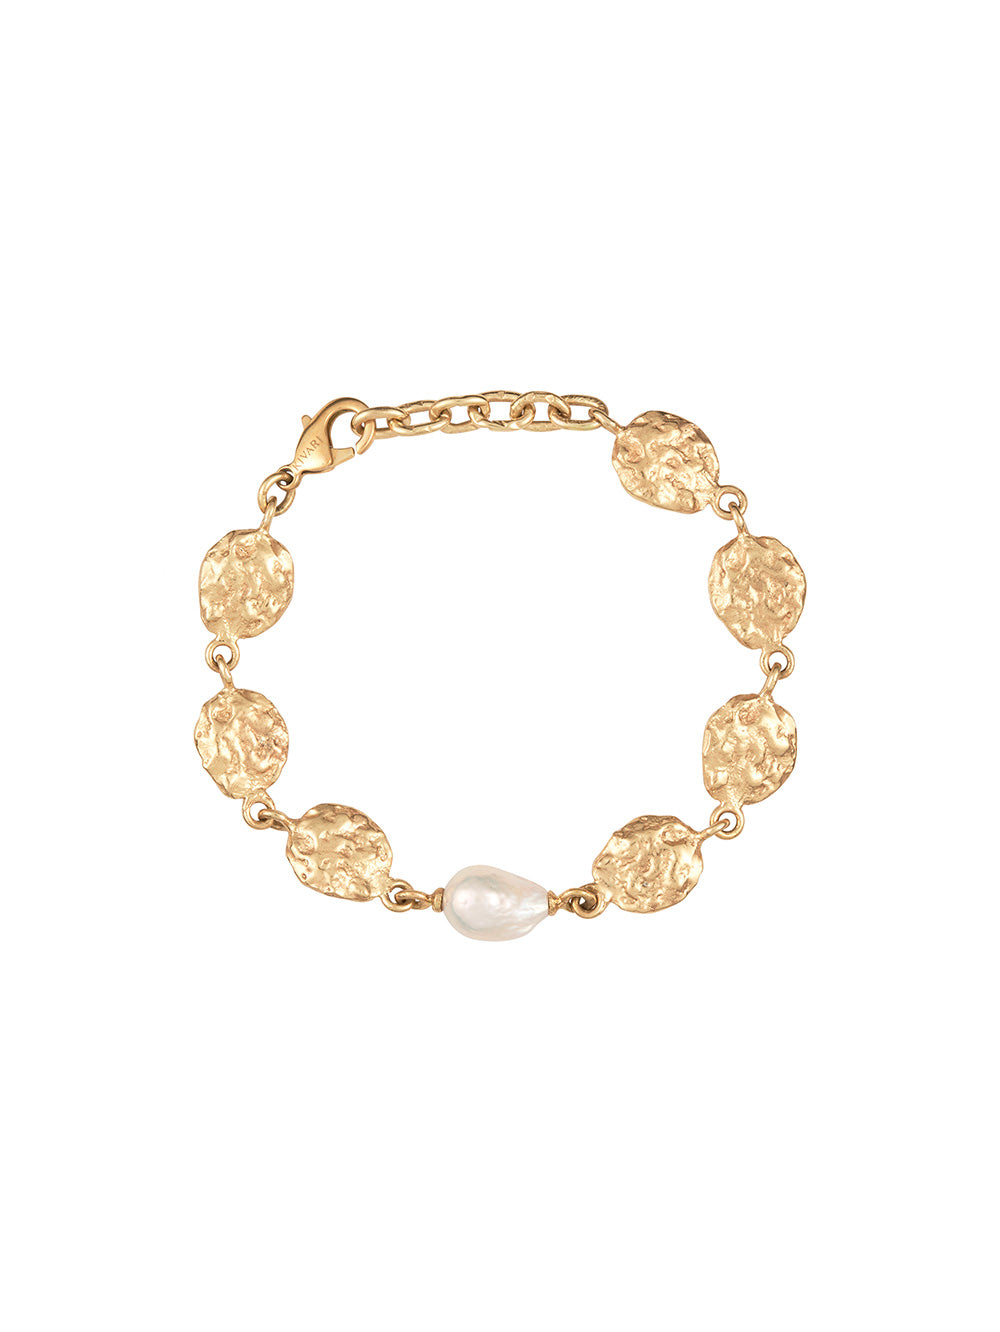 Calypso Pearl Bracelet